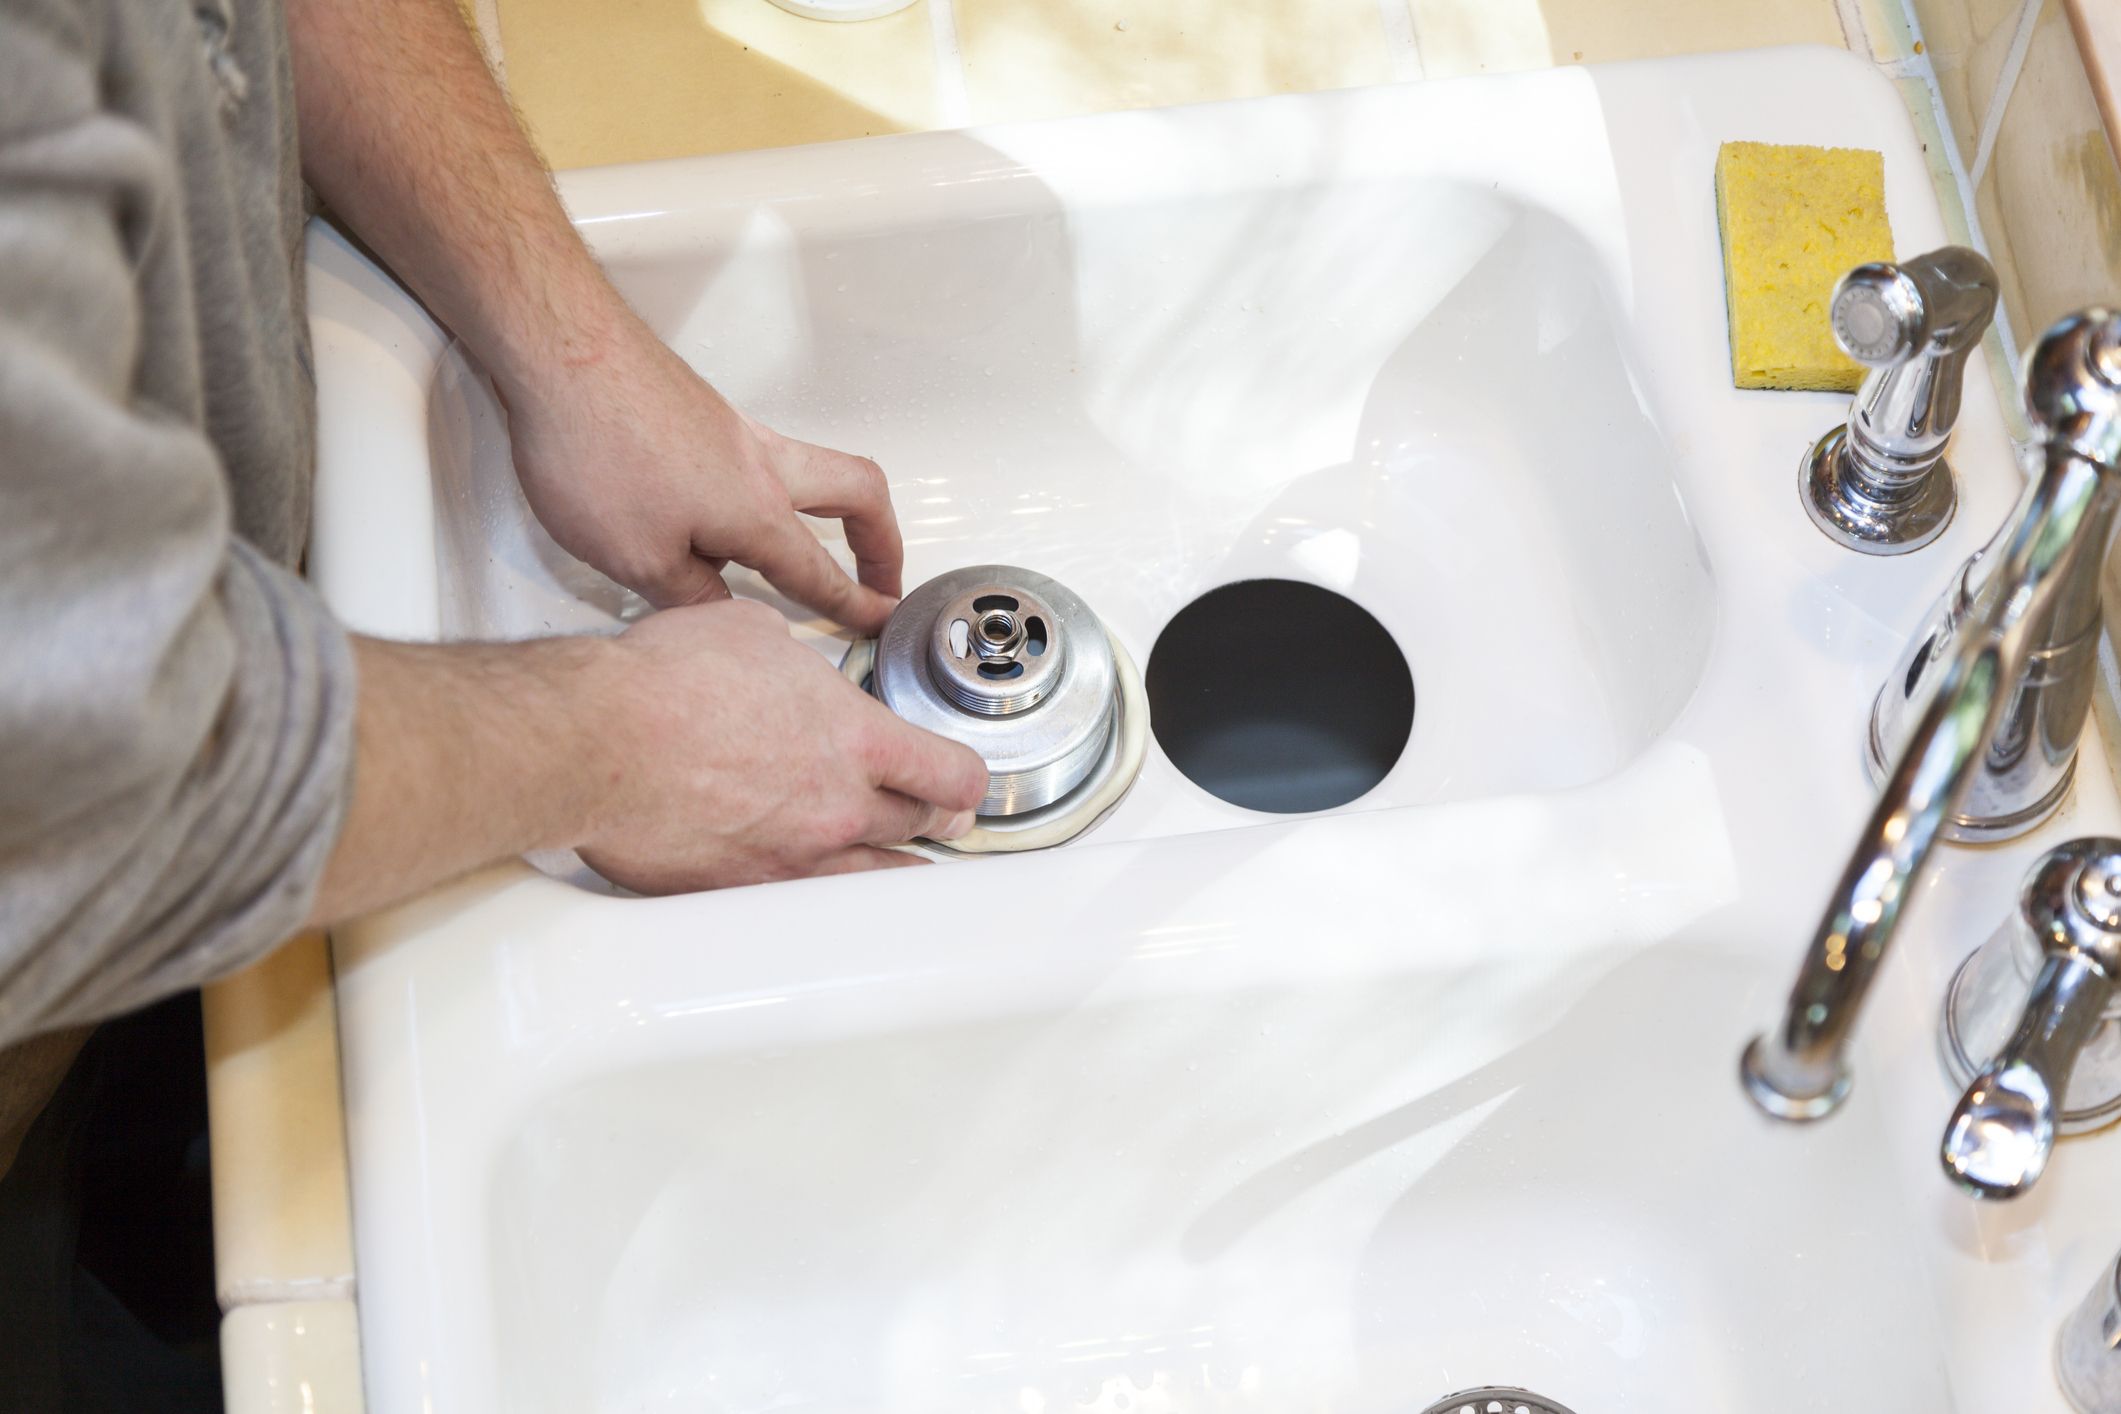 replace kitchen sink drain gasket